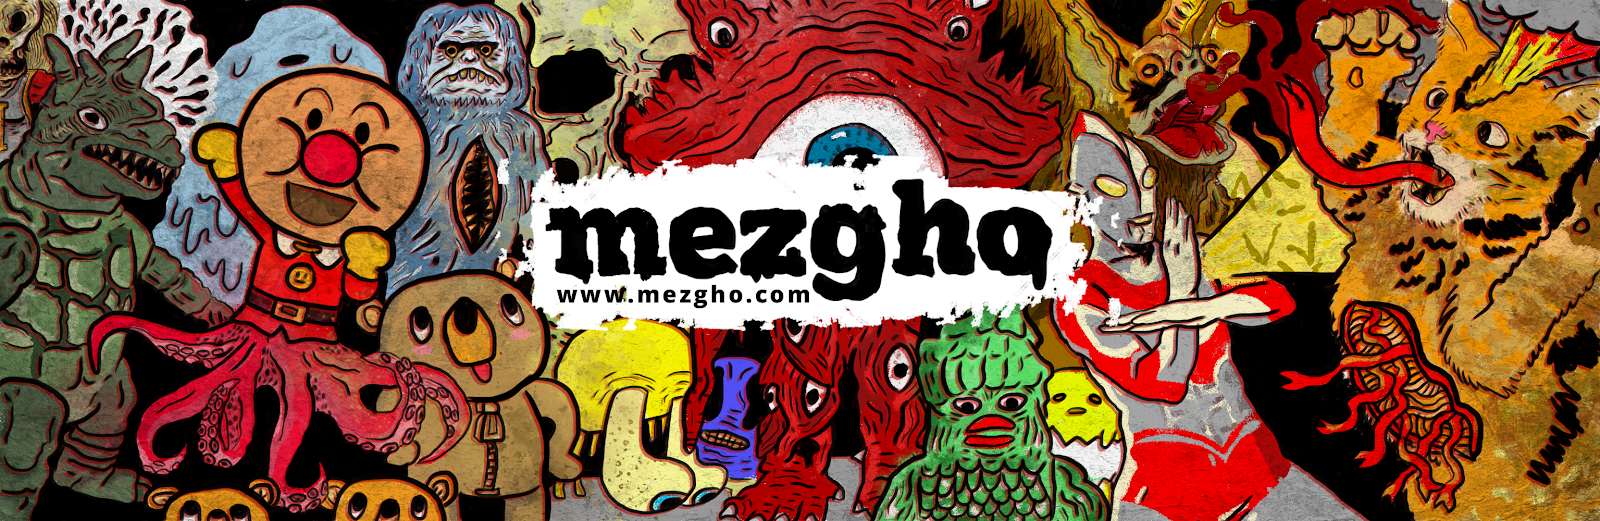 mezgho